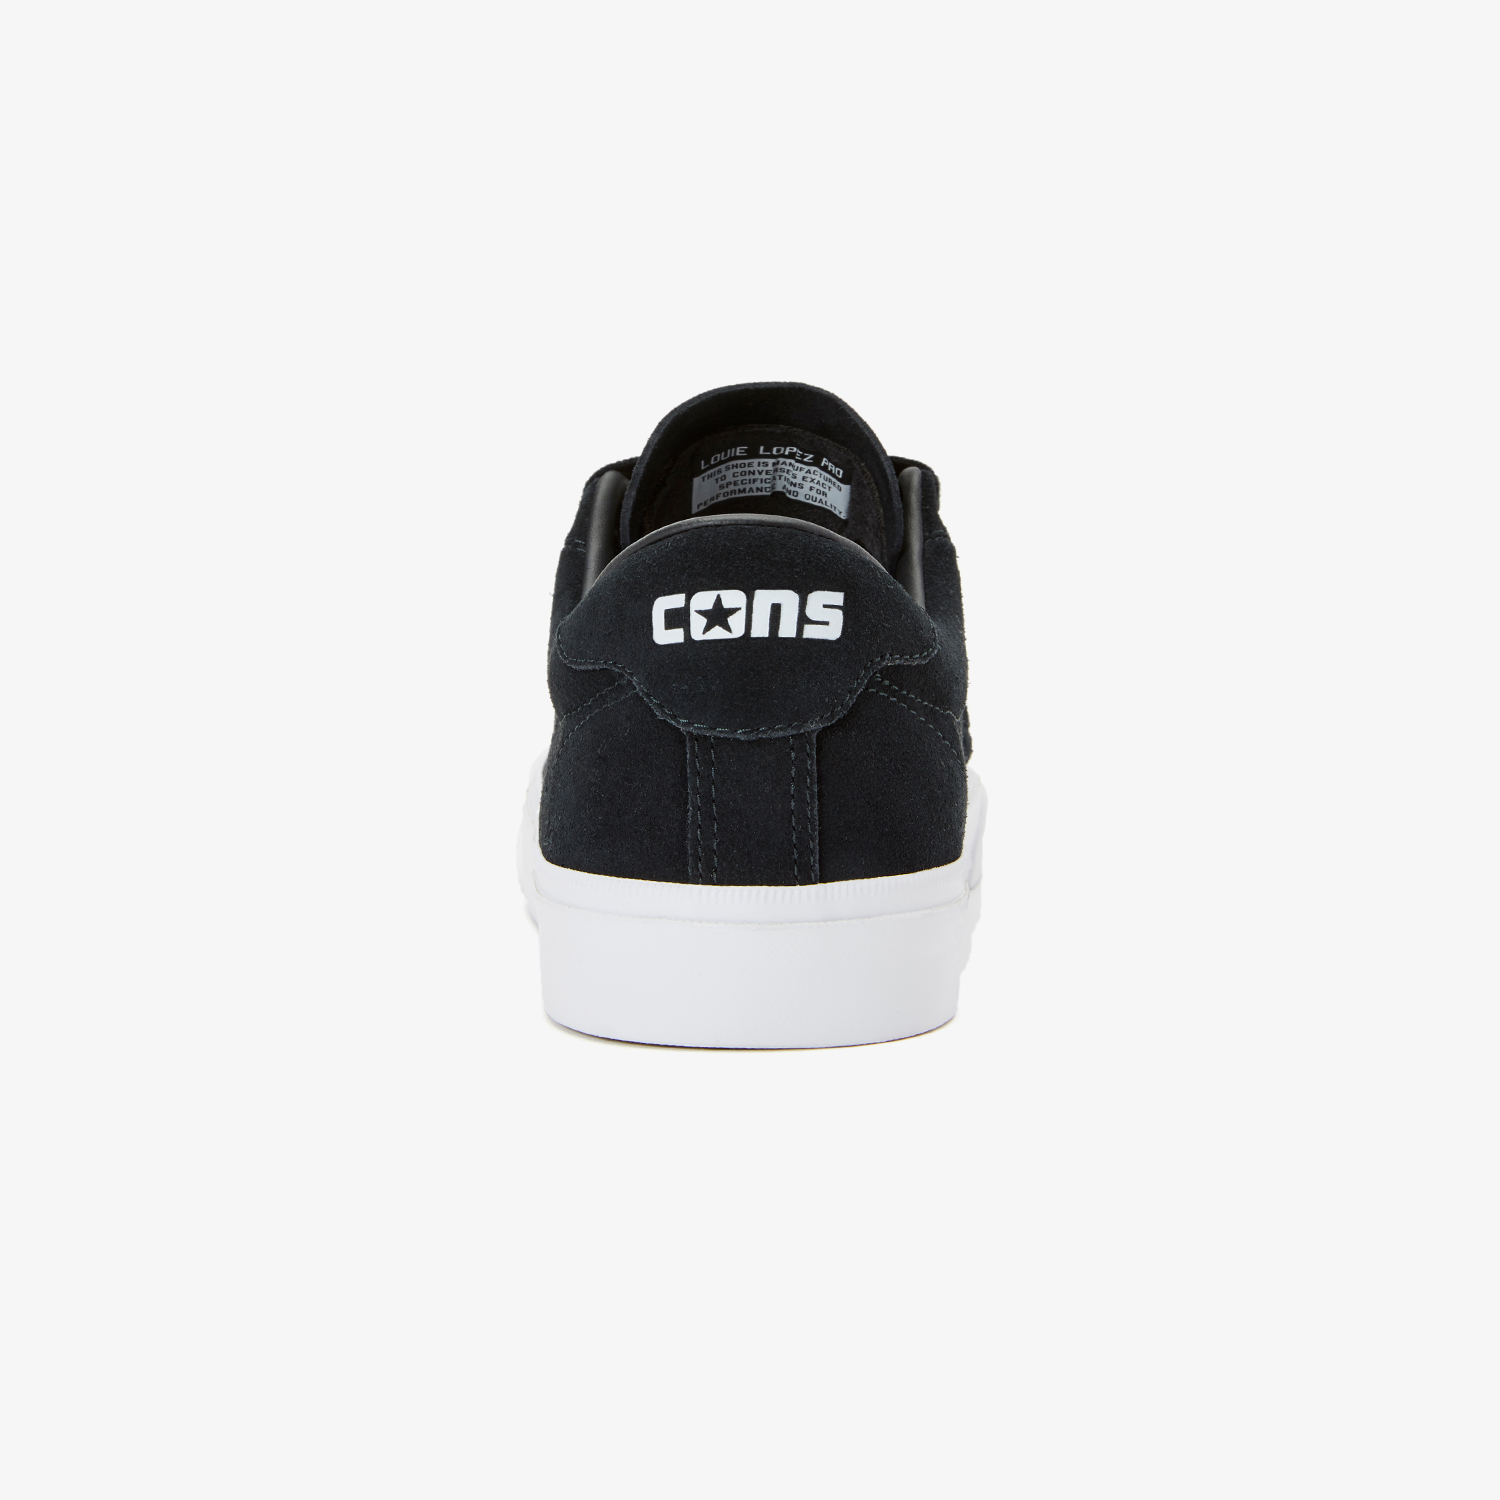 Converse Cons Louie Lopez Pro Erkek Siyah Sneaker